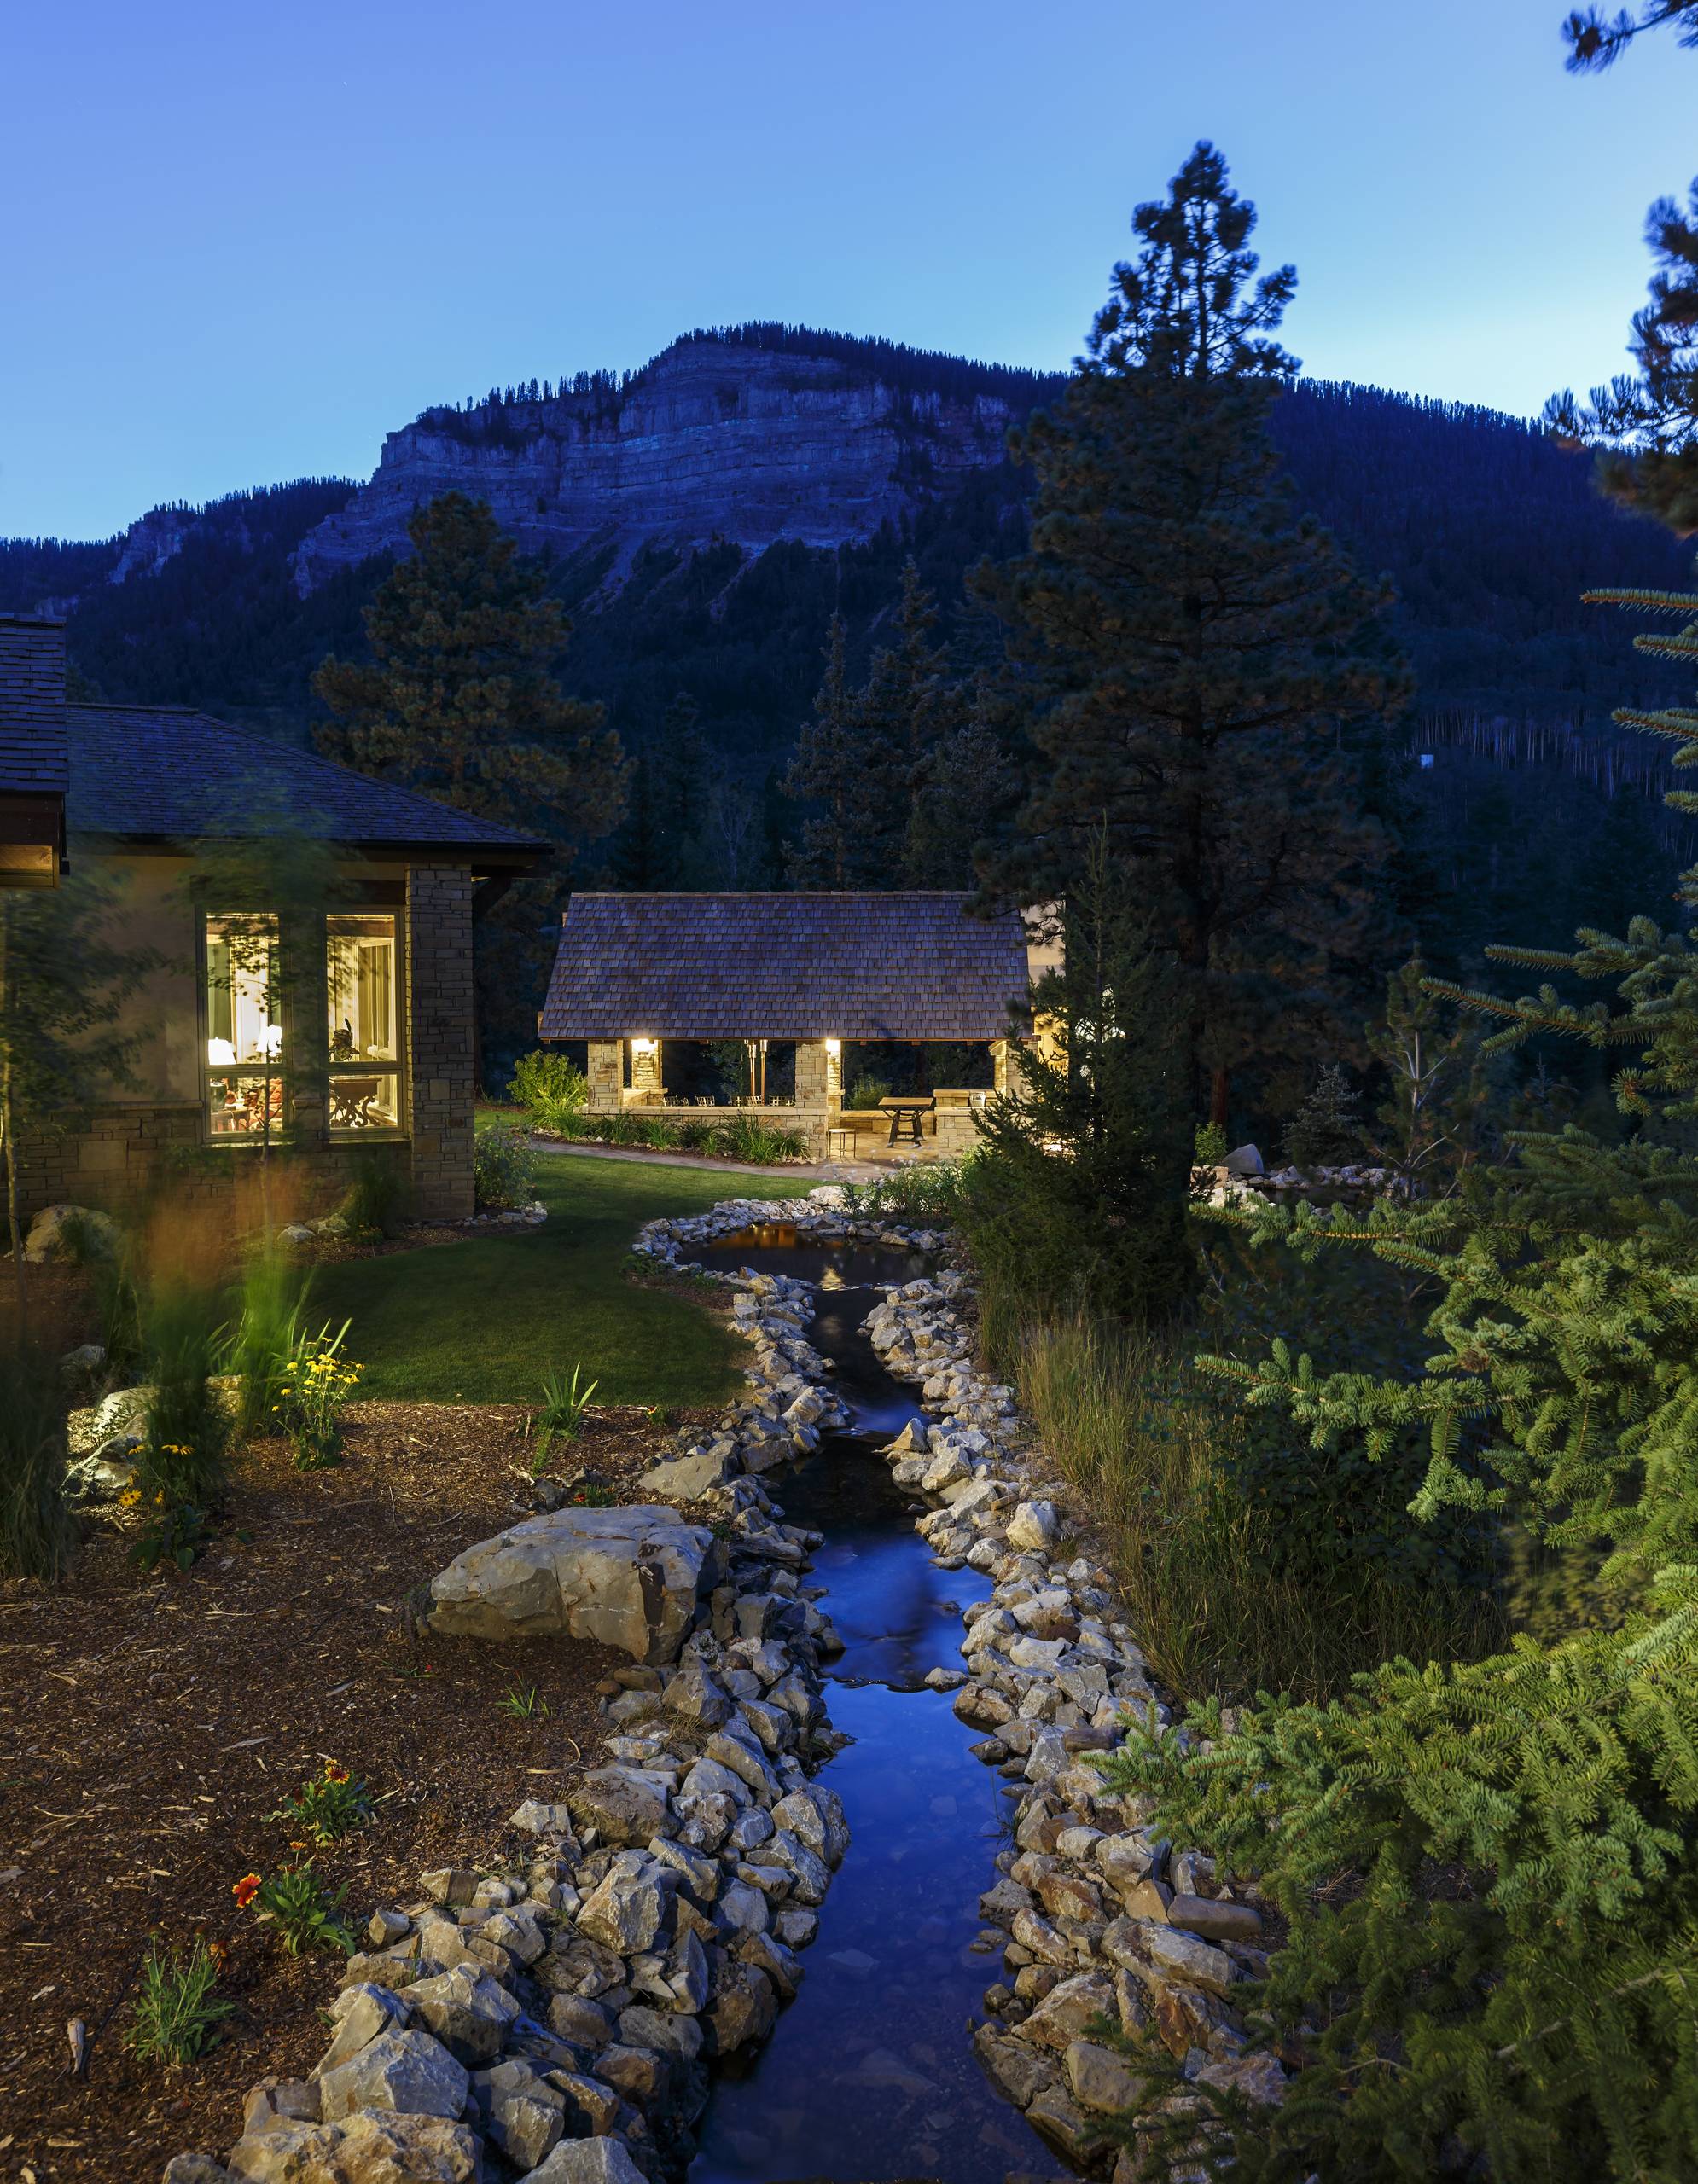 Certified Luxury Builders - Veritas Fine Homes Inc - Durango, CO - Weems Home